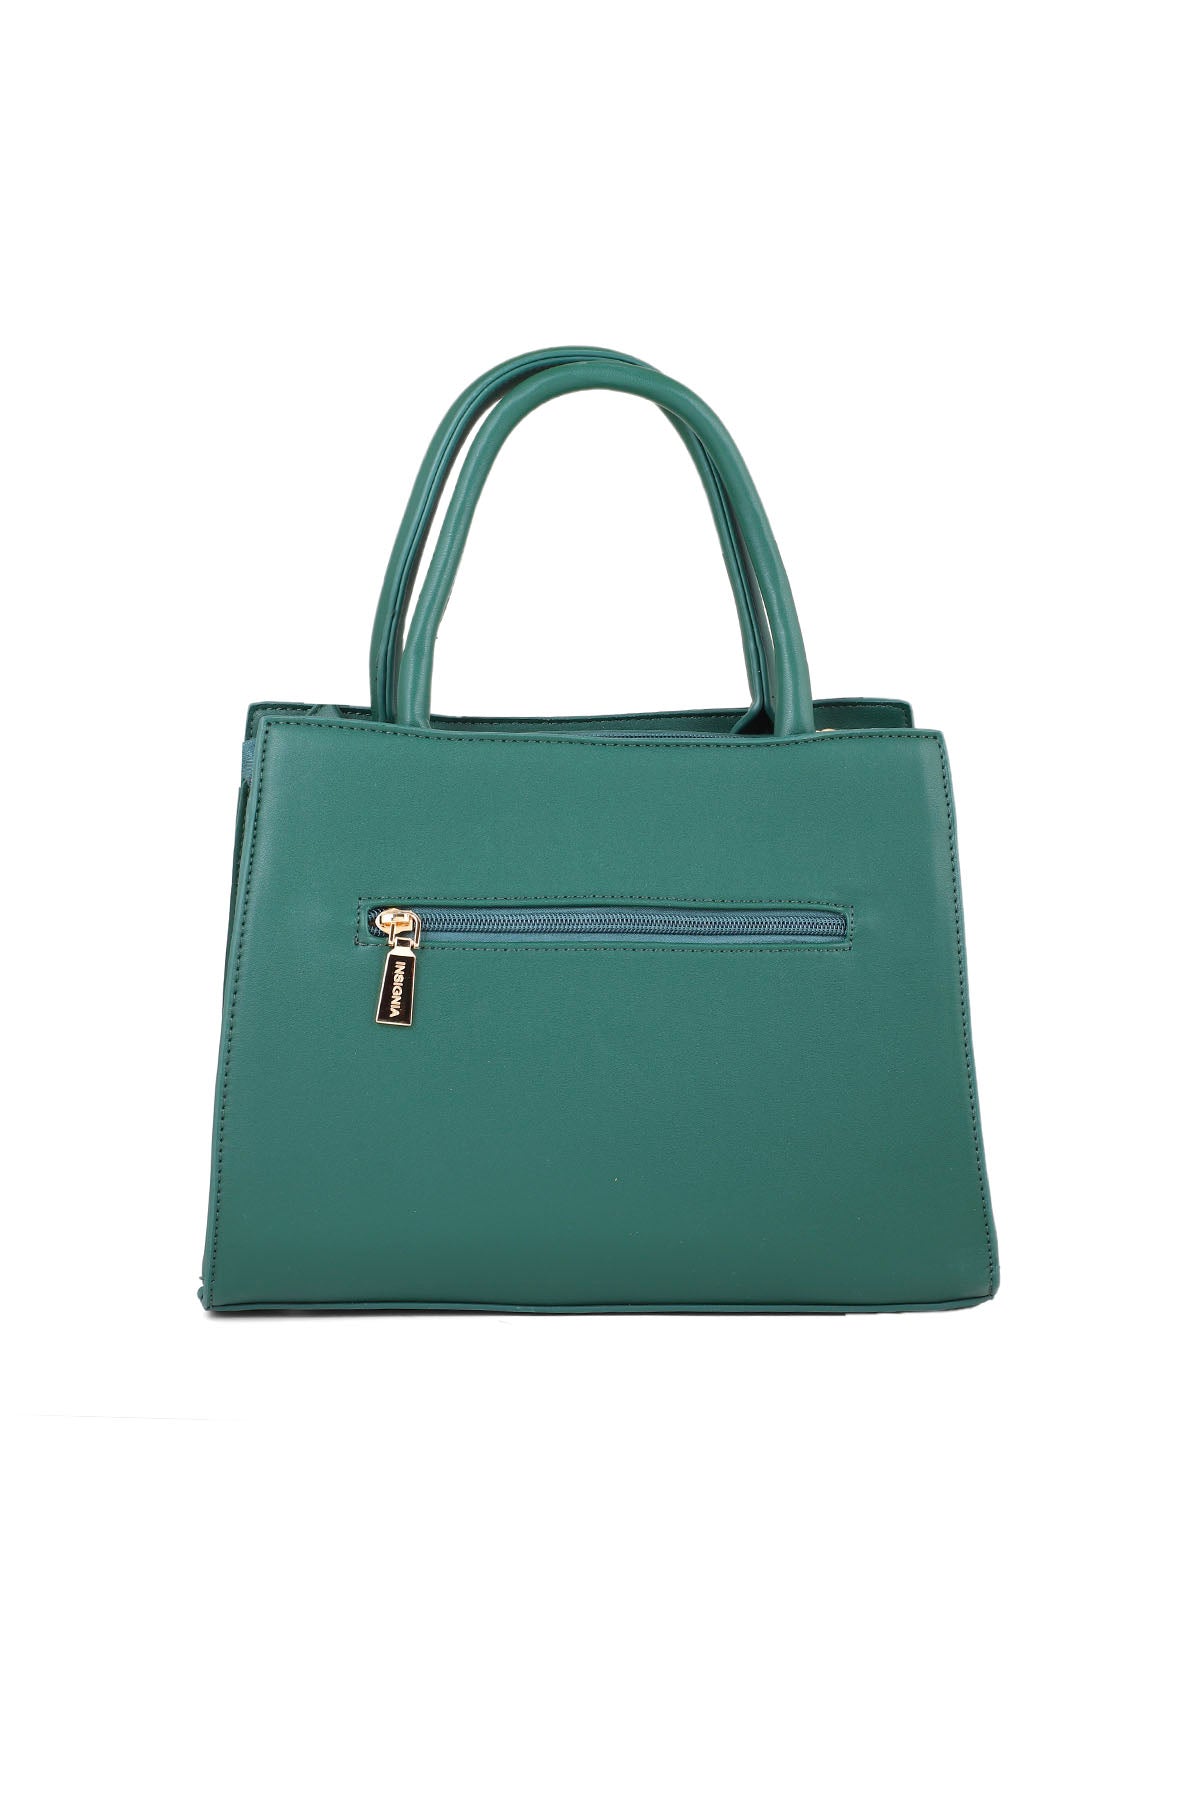 Pin by Njoud Abdulwasei on Fashion | Purses and handbags, Green prada bag,  Girly bags